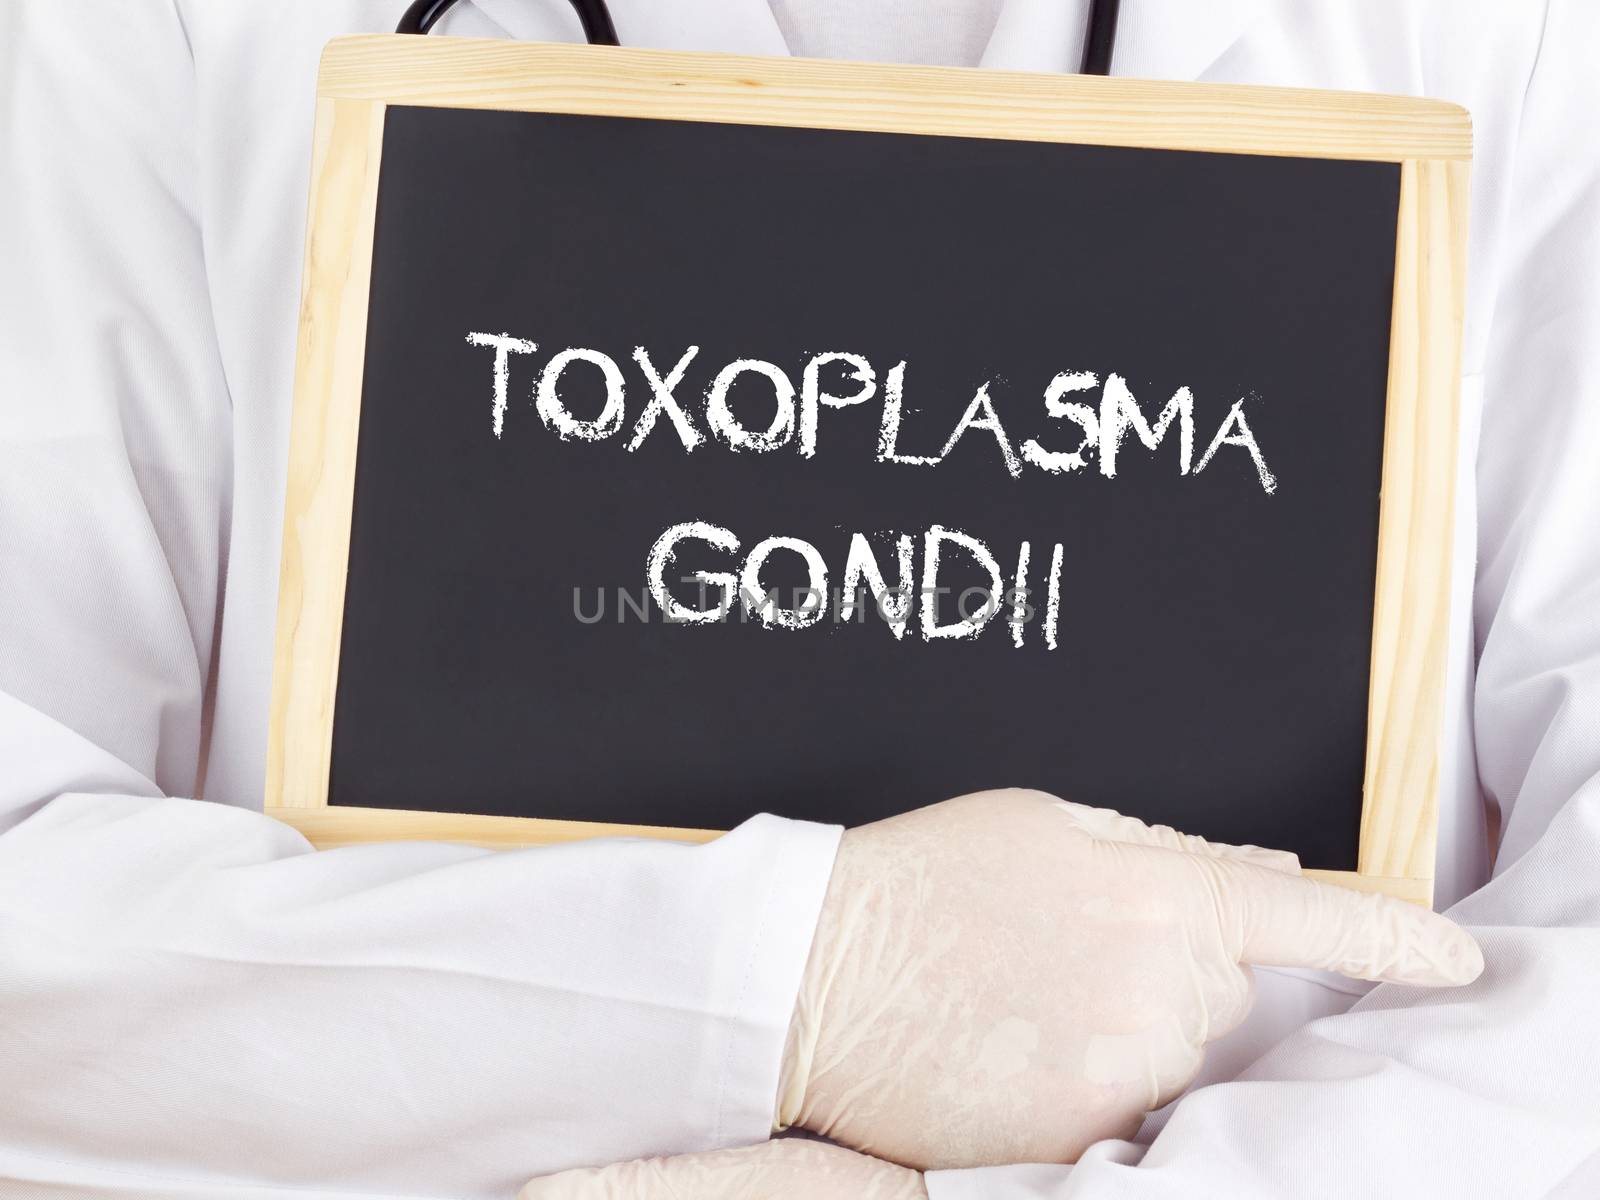 Doctor shows information: Toxoplasma gondii